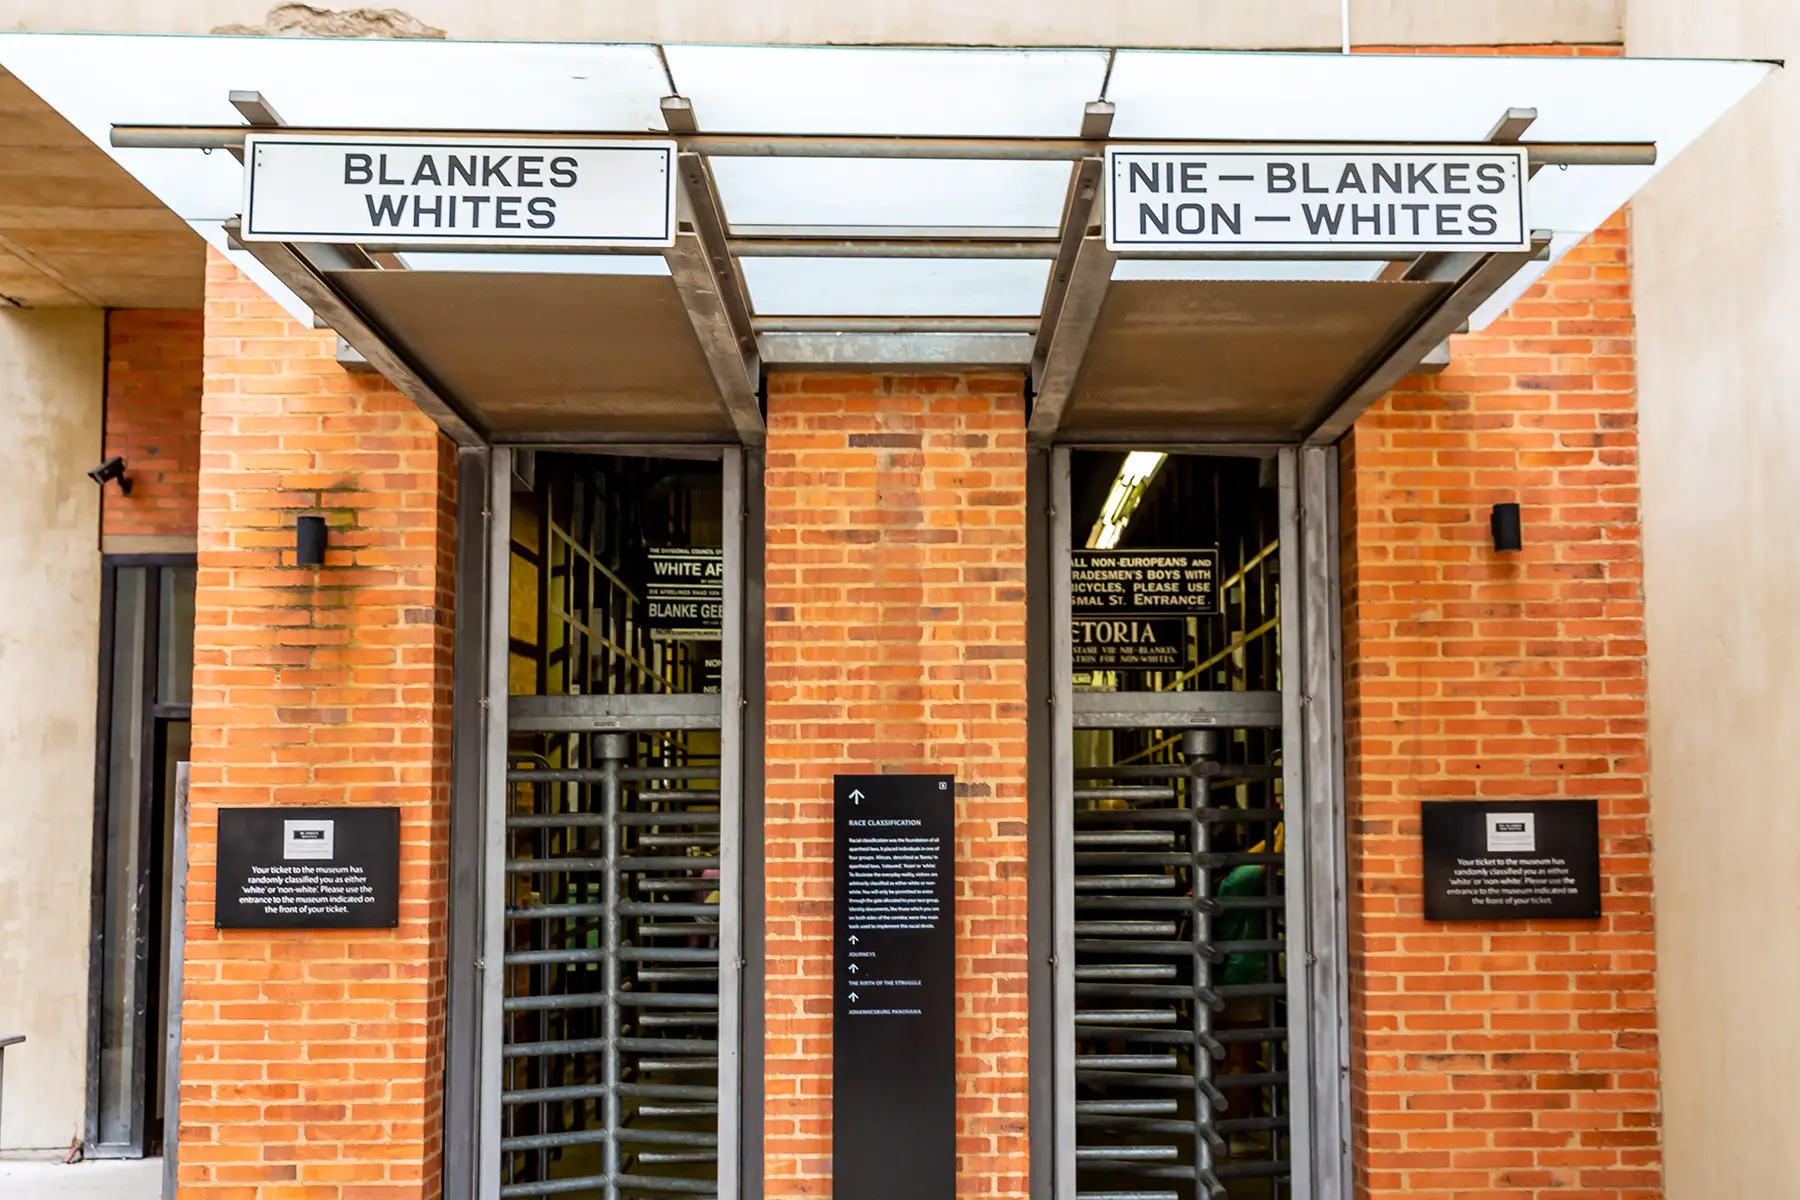 South African politics: Apartheid Museum